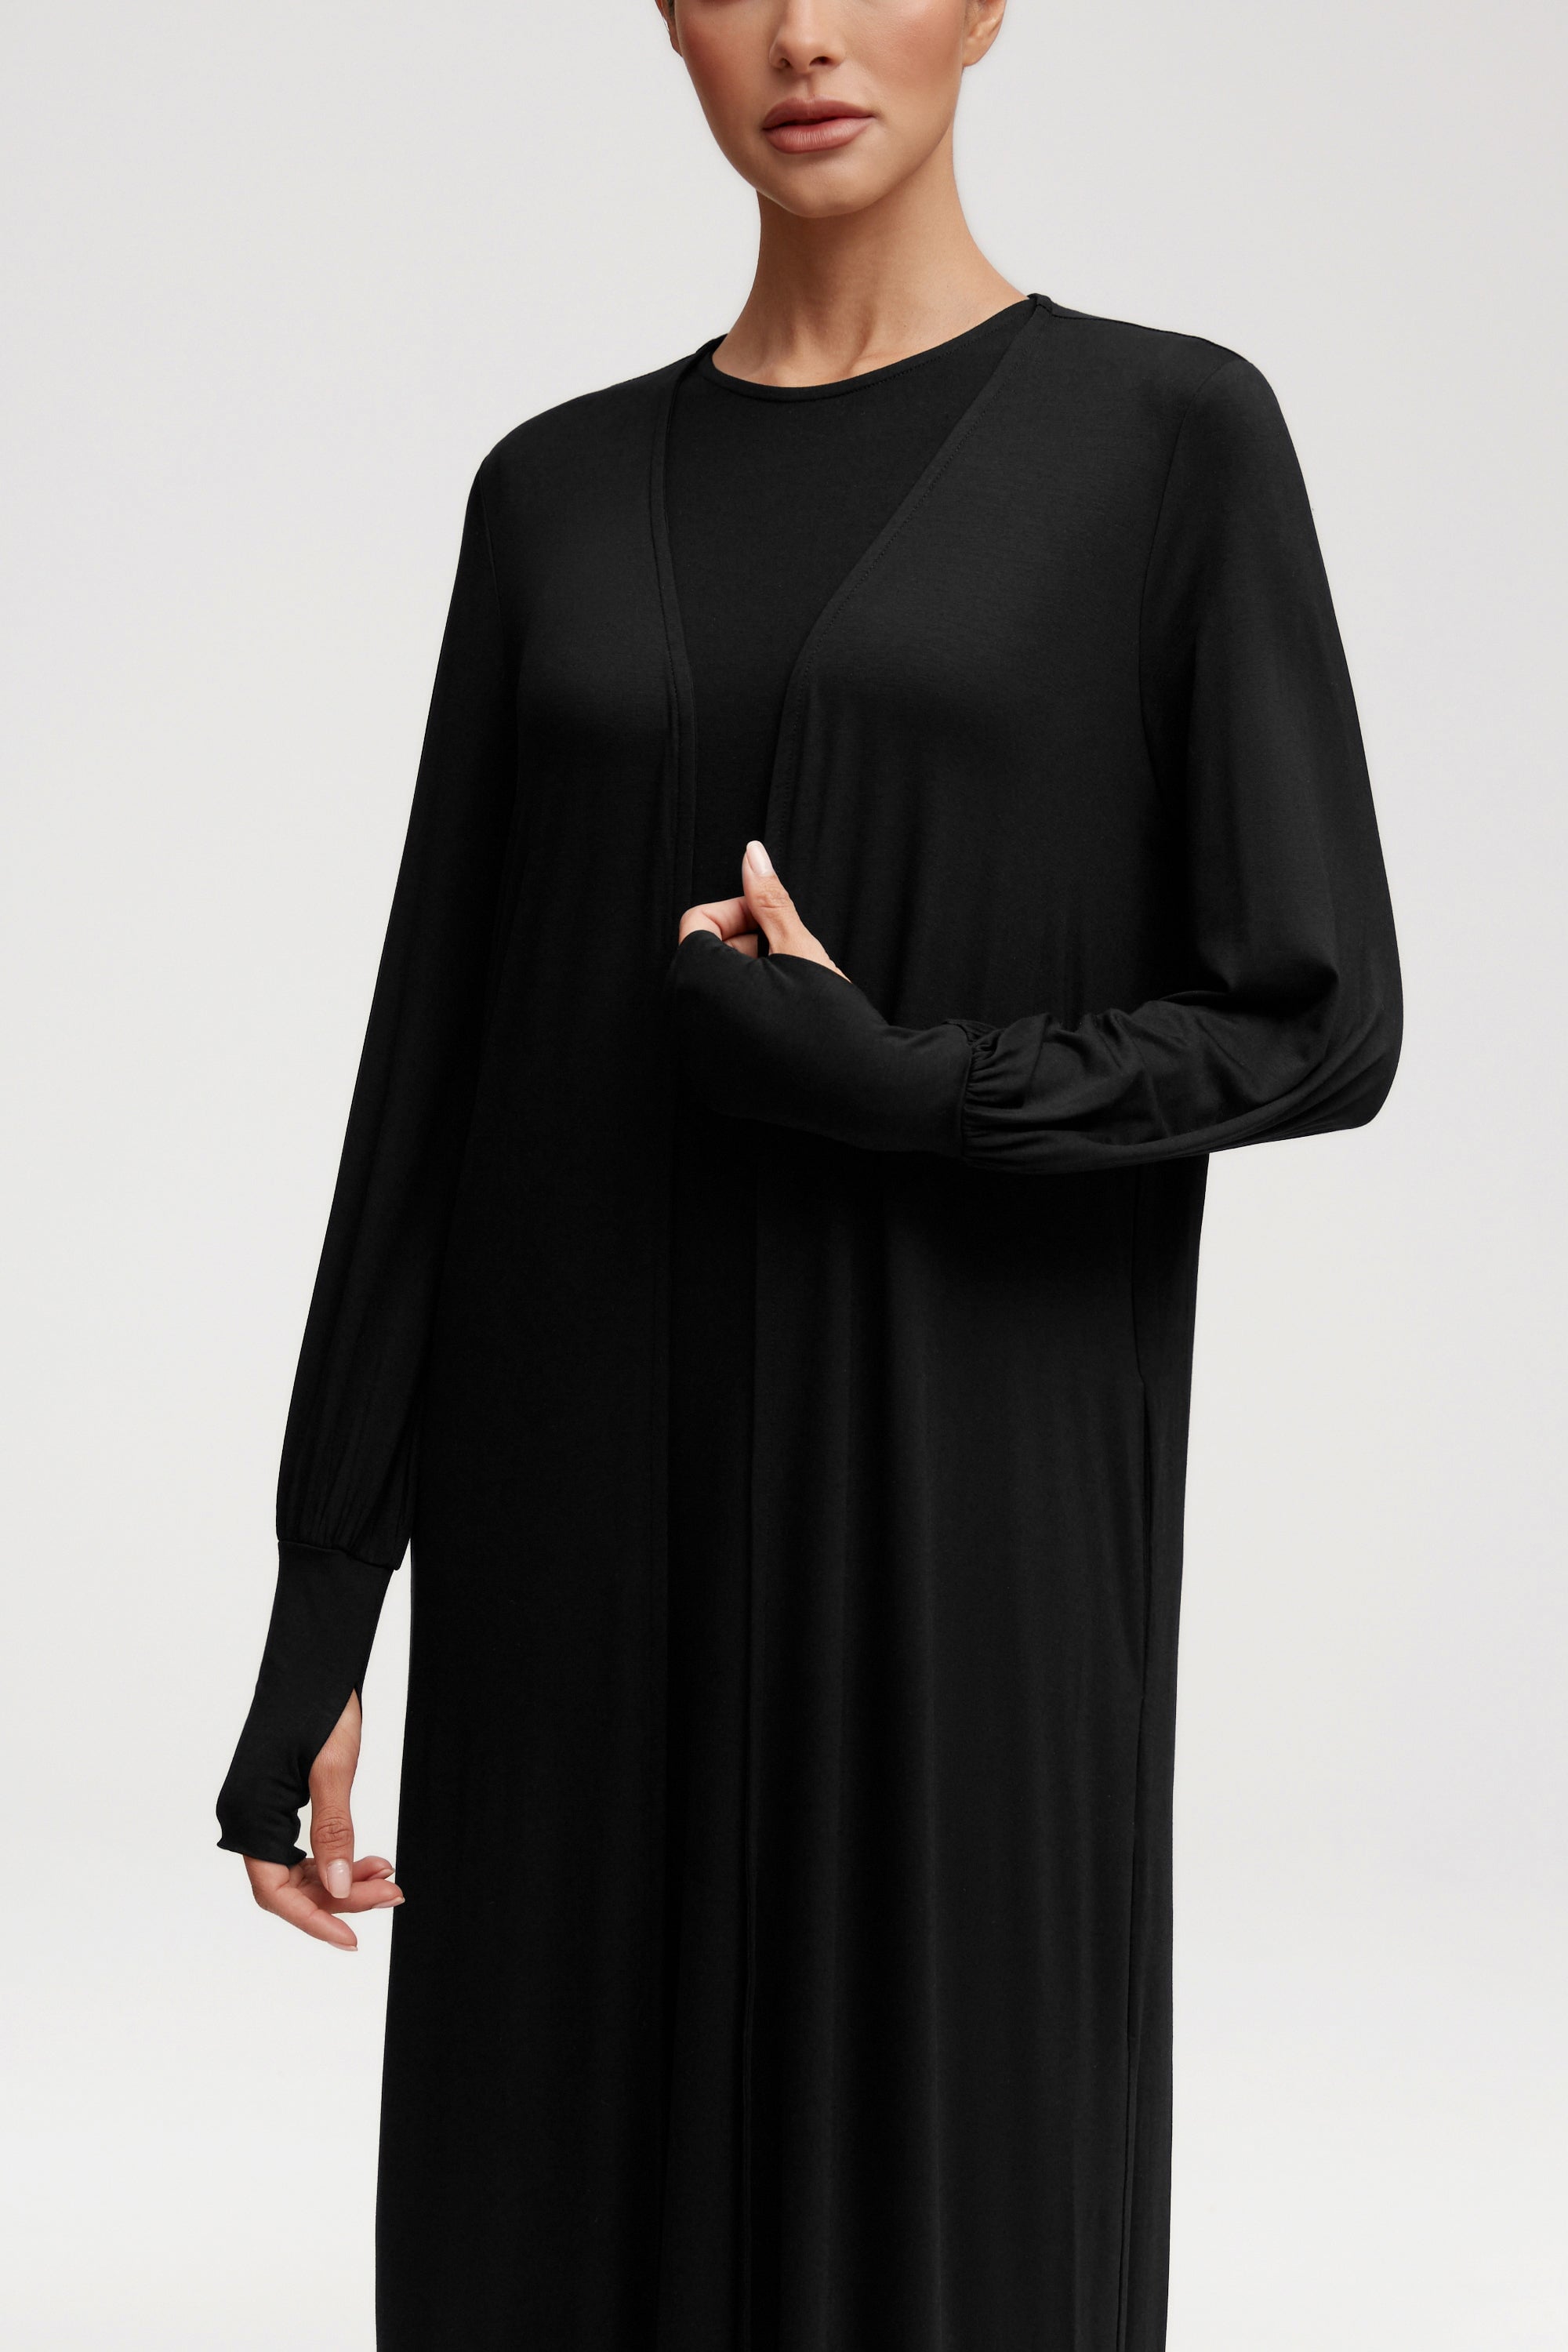 Jenin Jersey Open Abaya & Maxi Dress Set - Black Clothing epschoolboard 